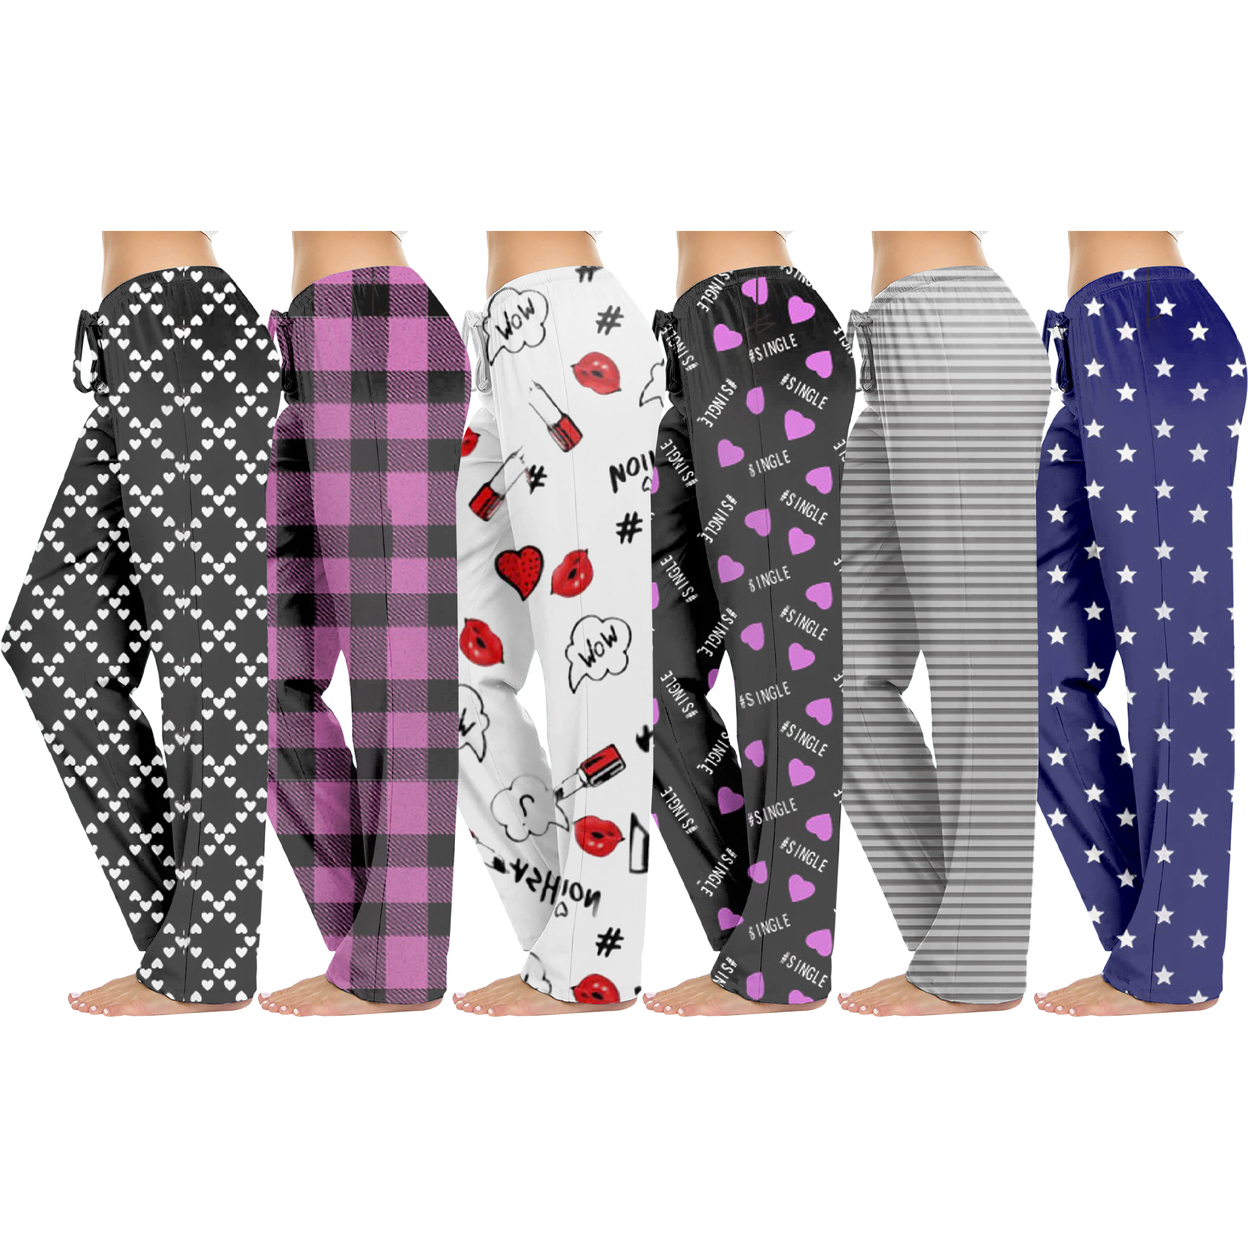 2-Pack: Women's Casual Fun Printed Lightweight Lounge Terry Knit Pajama Bottom Pants - Medium, Animal